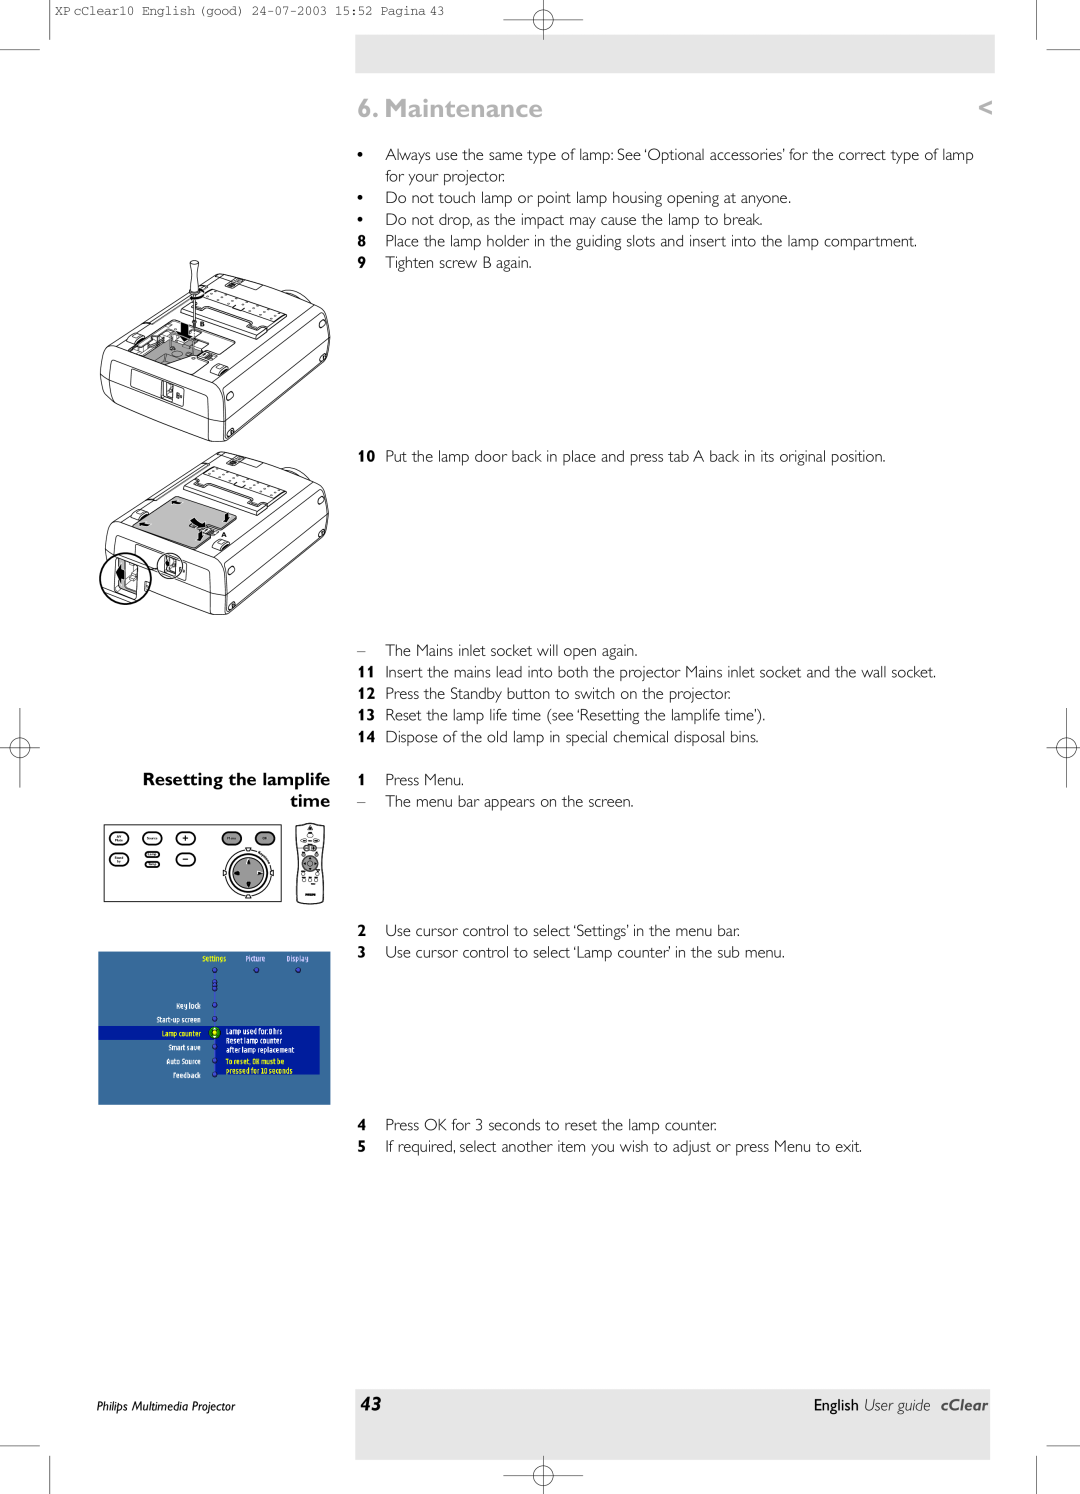 Philips bSure 1 manual time, Maintenance, Resetting the lamplife, Press Menu 